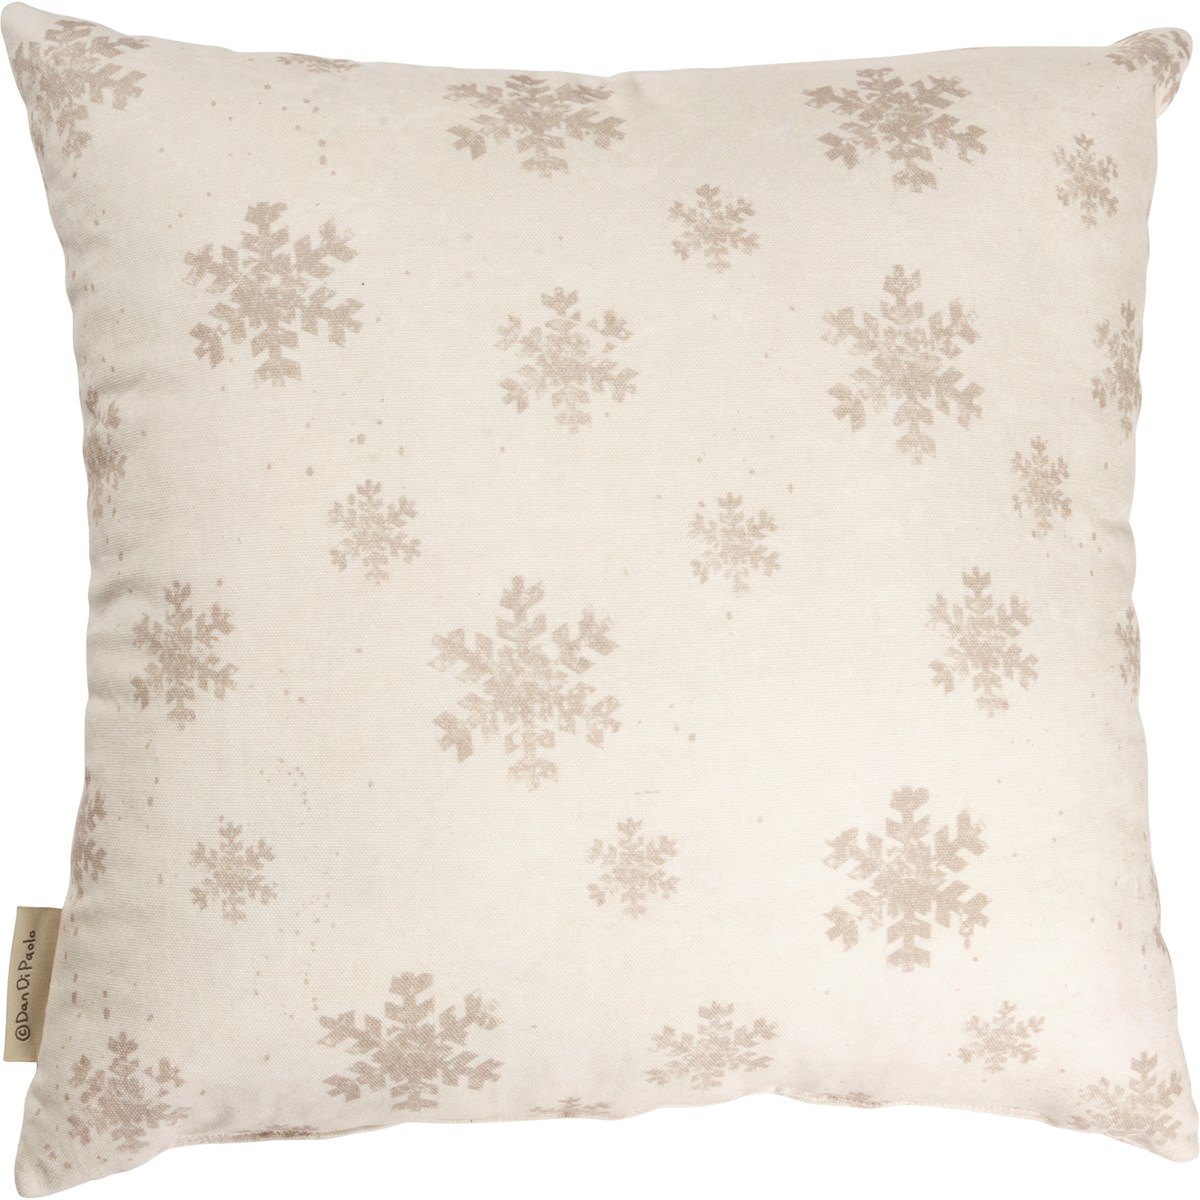 Nordic Merry Christmas Snowflake Pillow - Cotton, Zipper